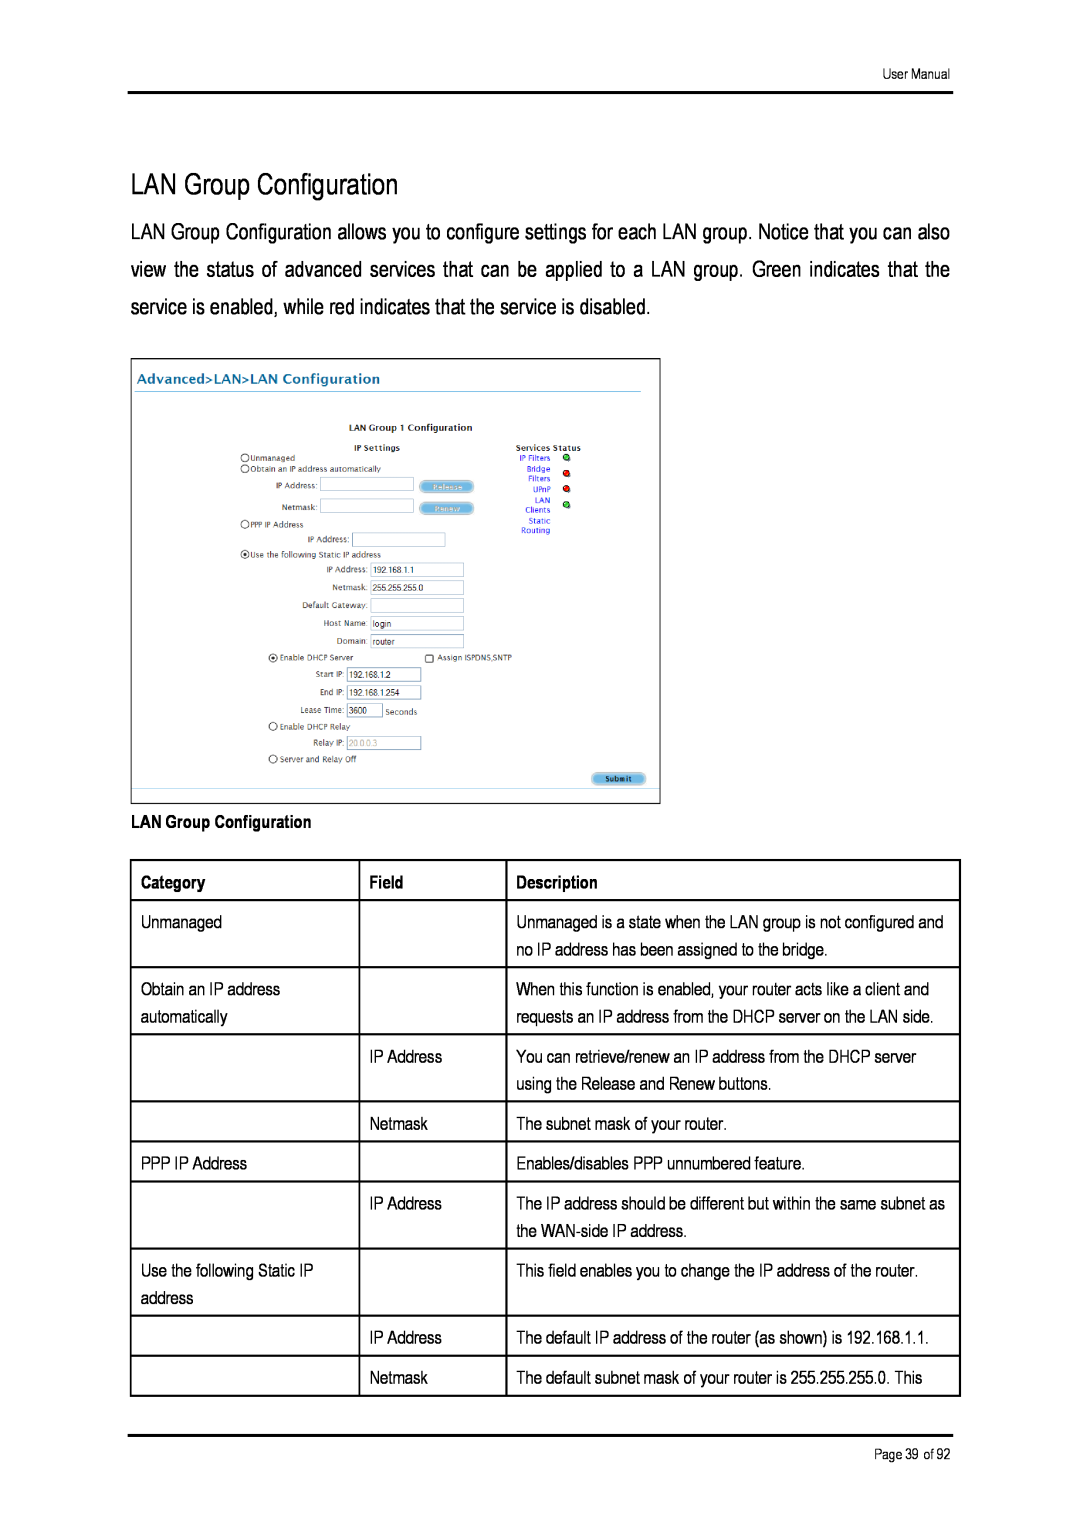 Shiro ADSL 2/2+ Ethernet Modem manual LAN Group Configuration, Category, Field, Description 